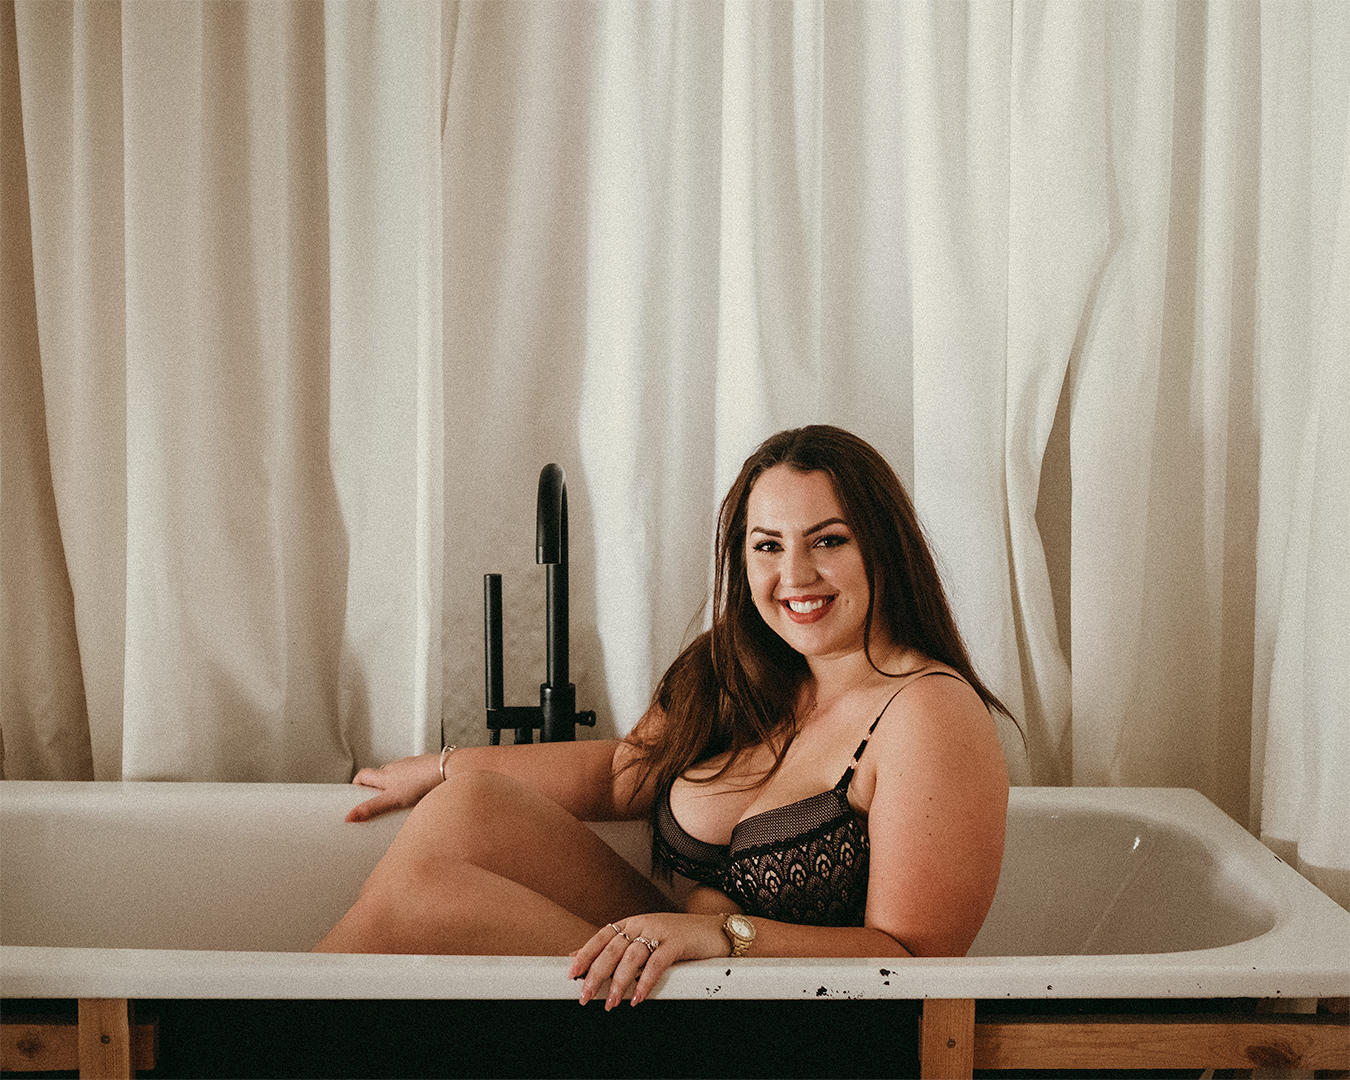 Berlin Boudoir empowering boudoir photo shoots